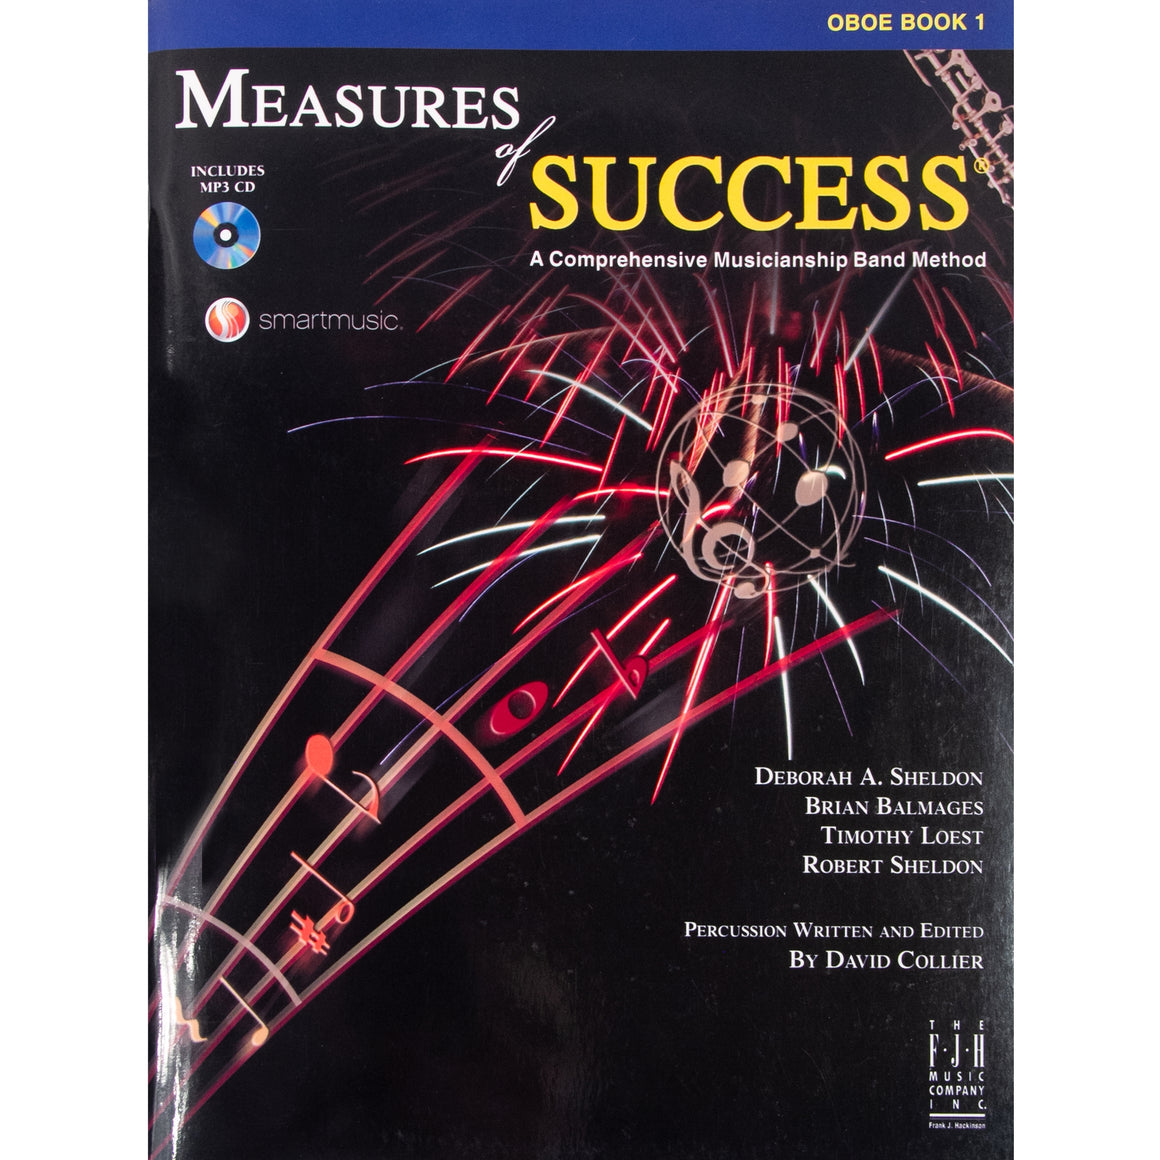 FJH PUBLISHER BB208OB Measures of Success Oboe Bk 1